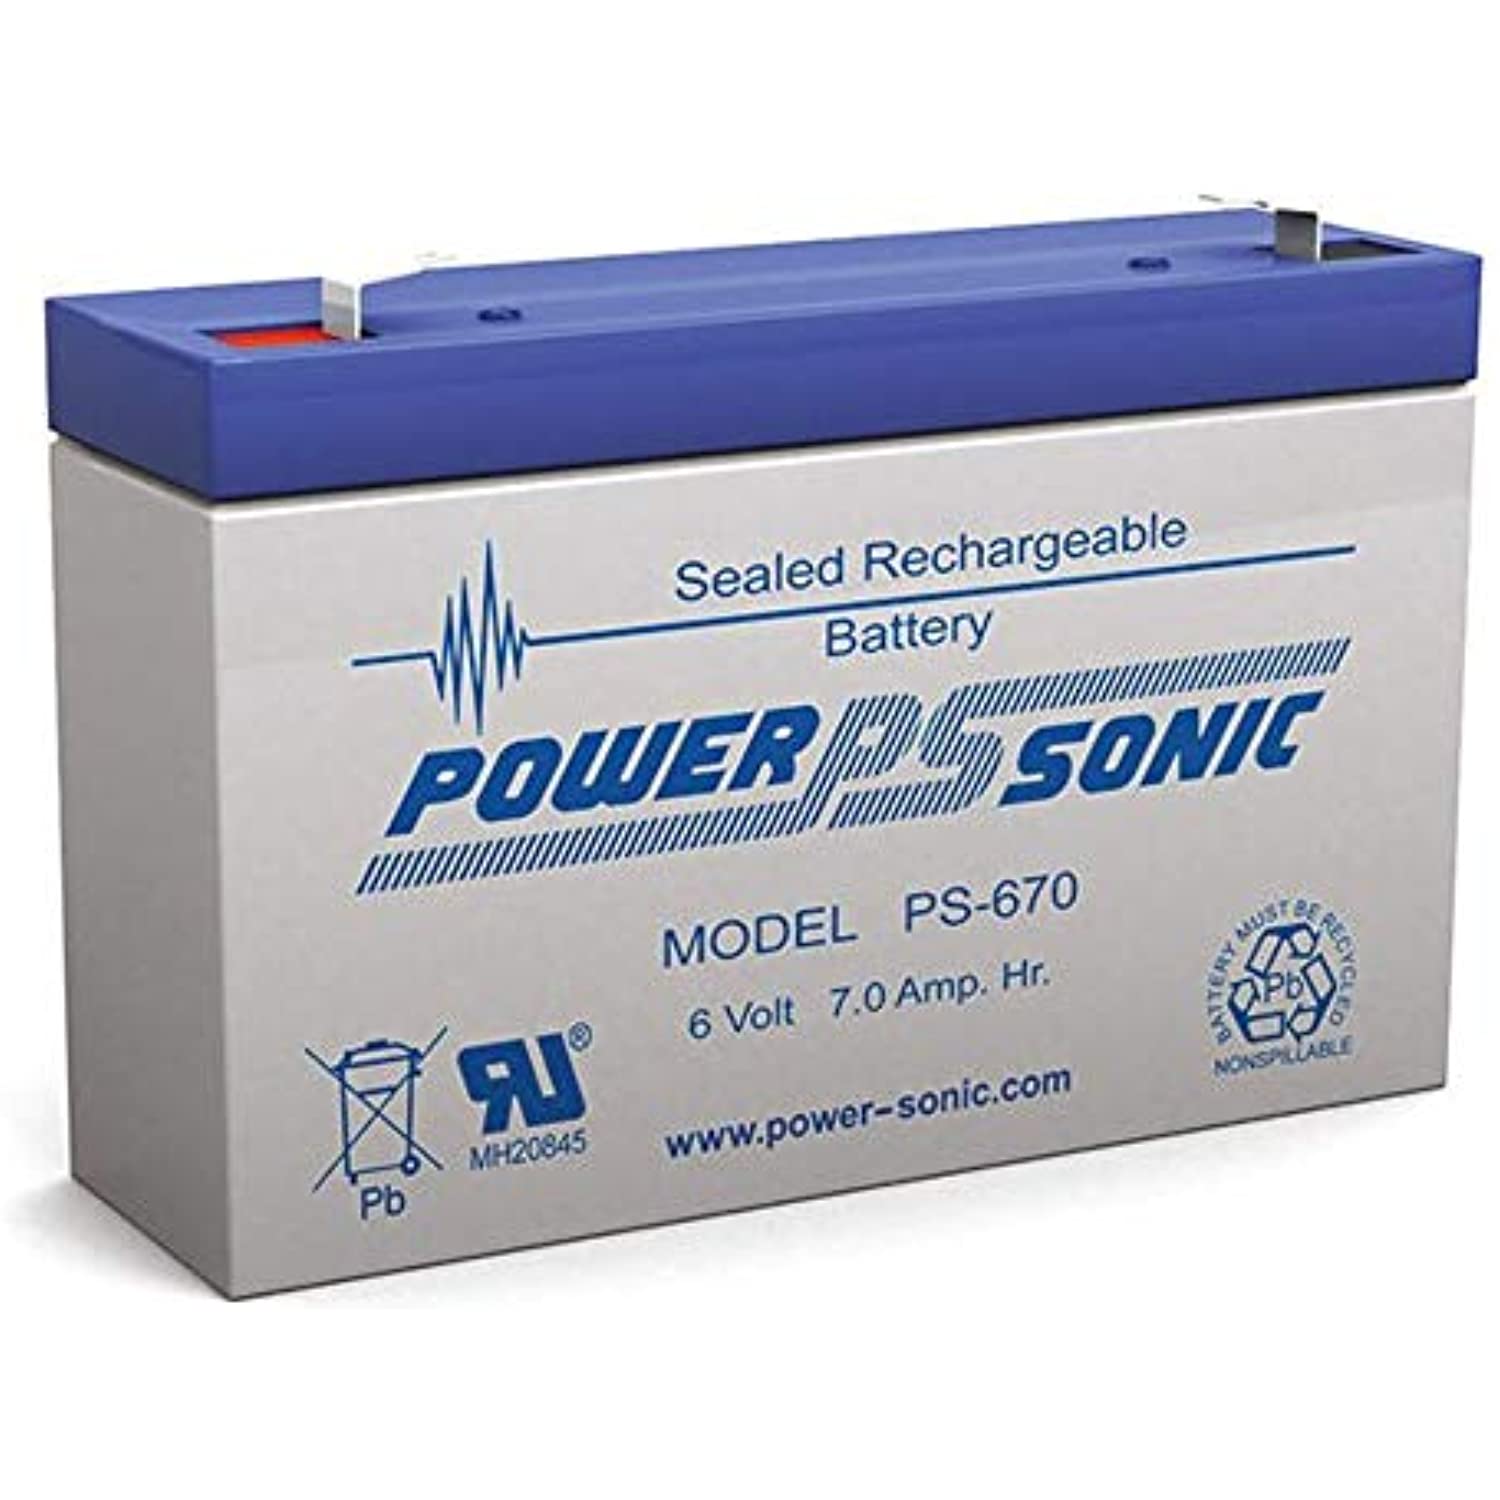 Power-Sonic, PS-6100